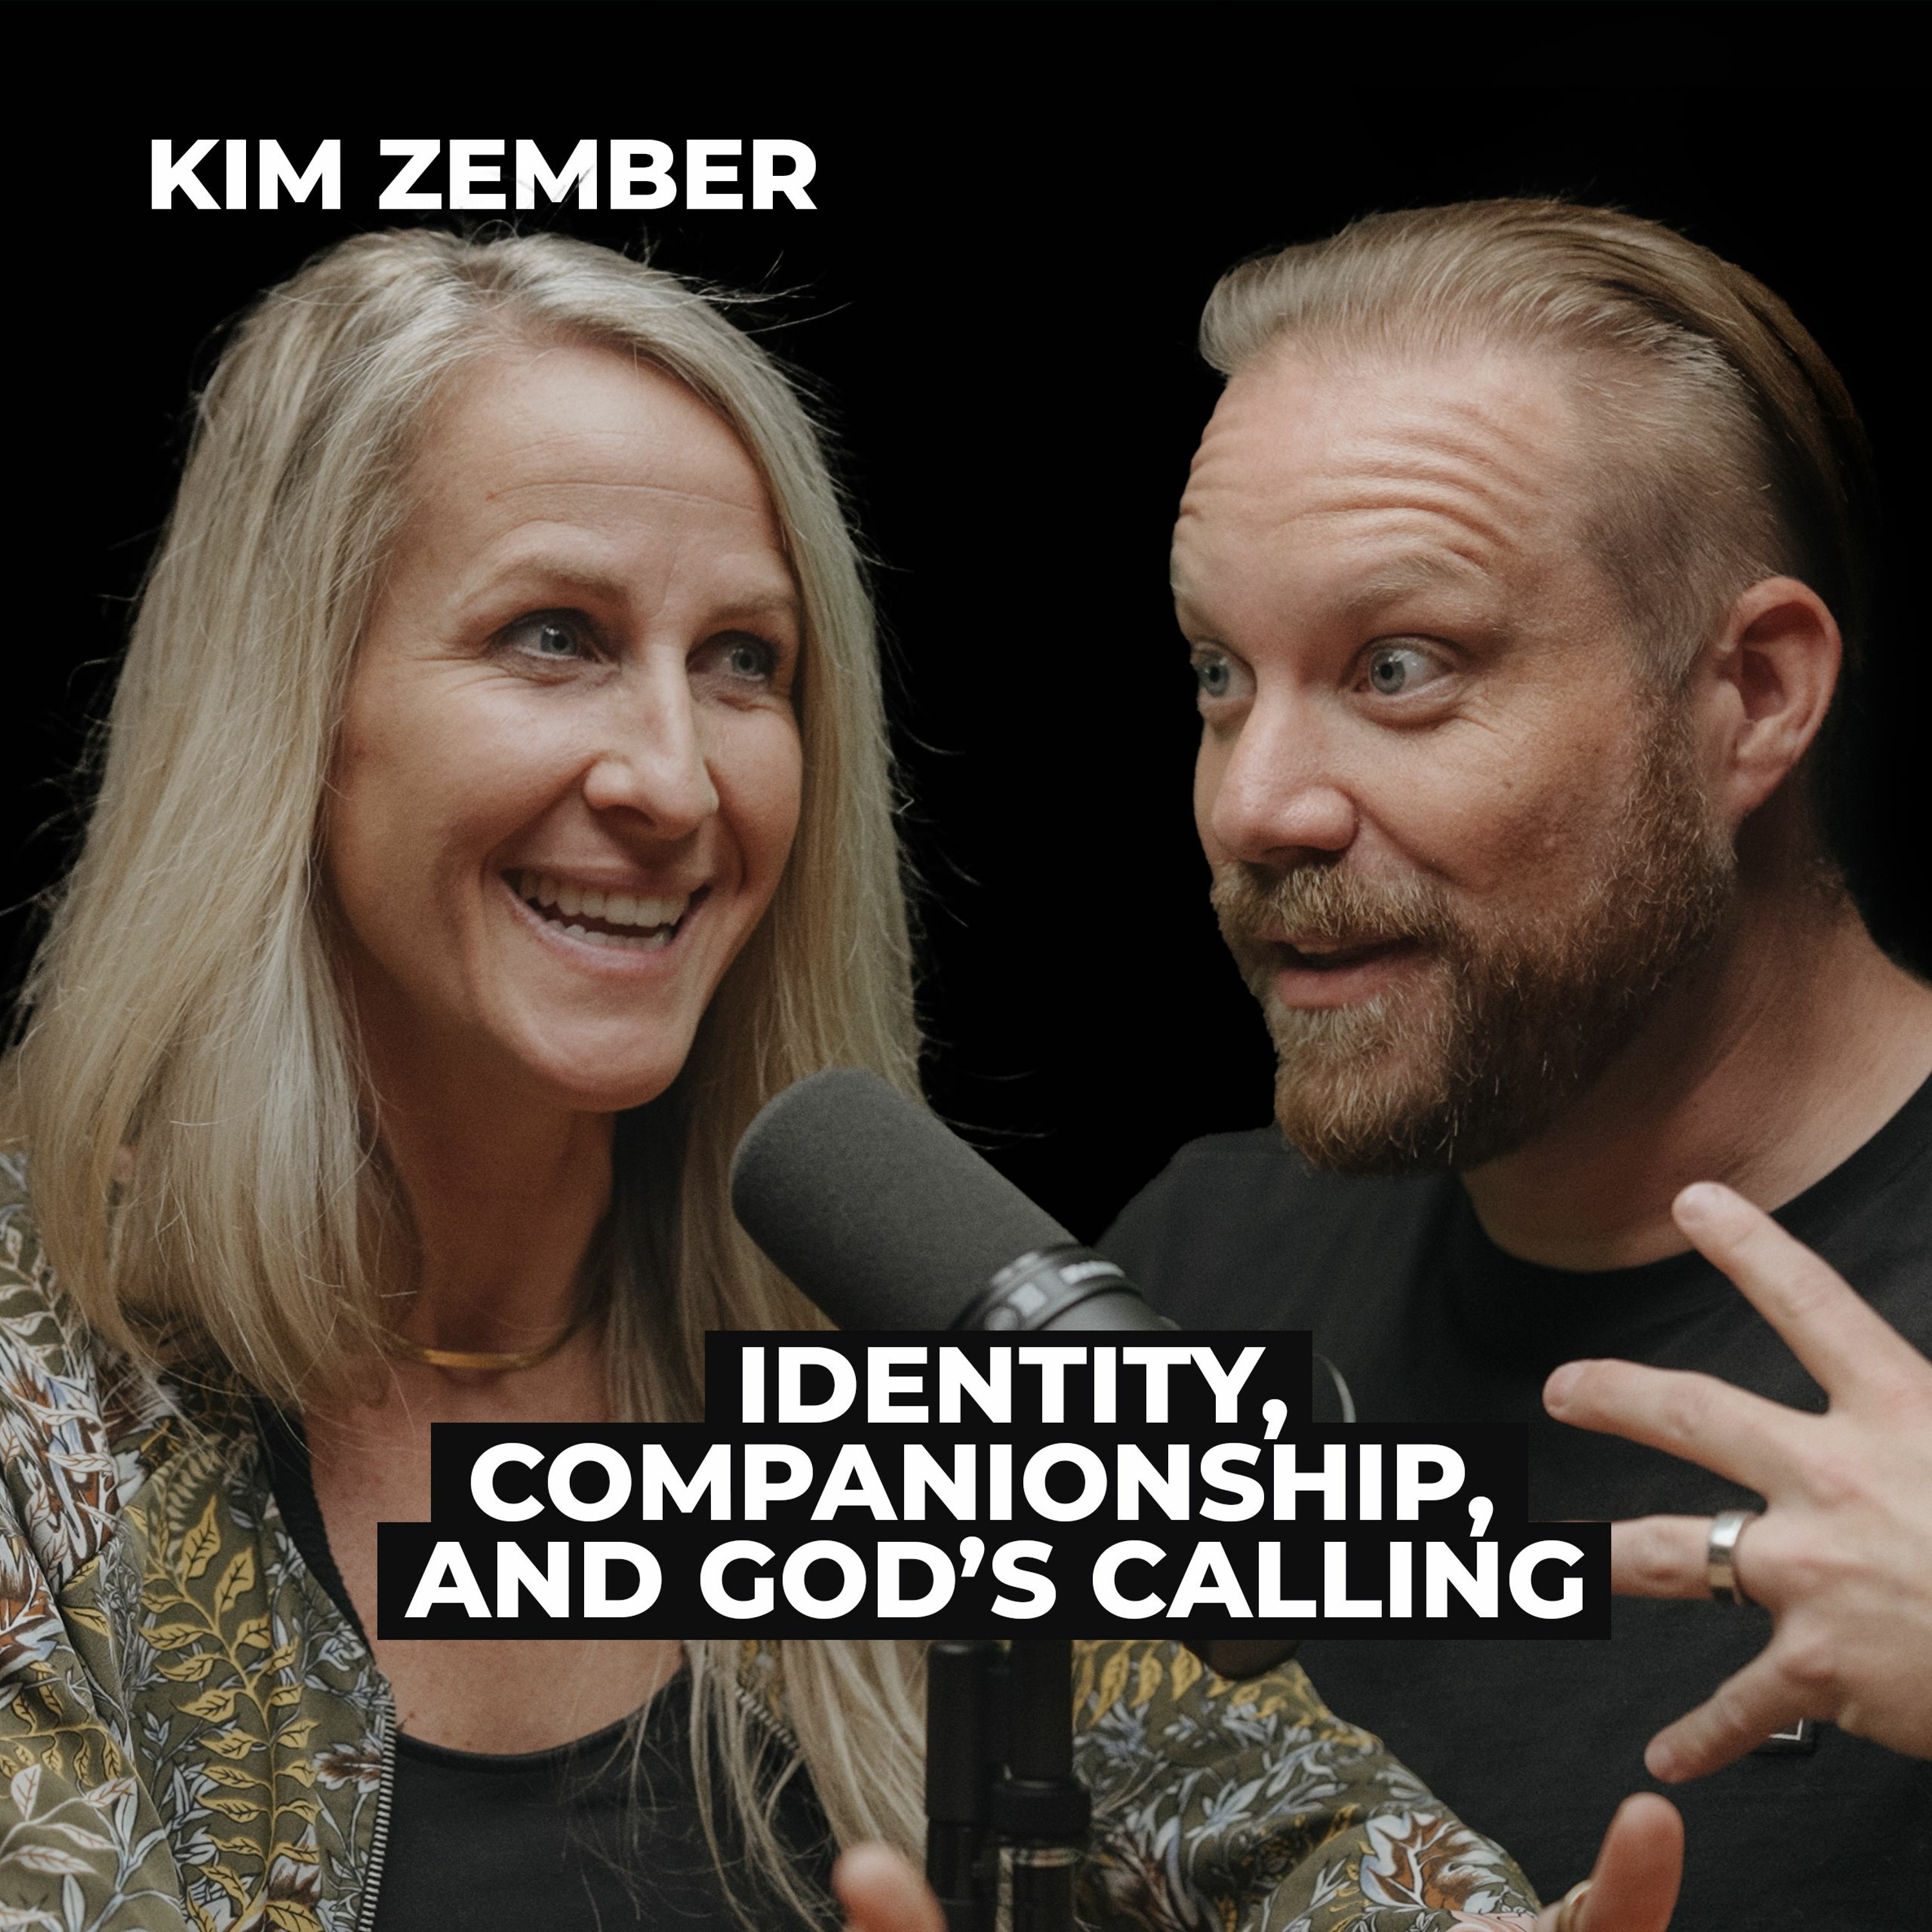 Kim Zember: Identity, Companionship, and God’s Calling